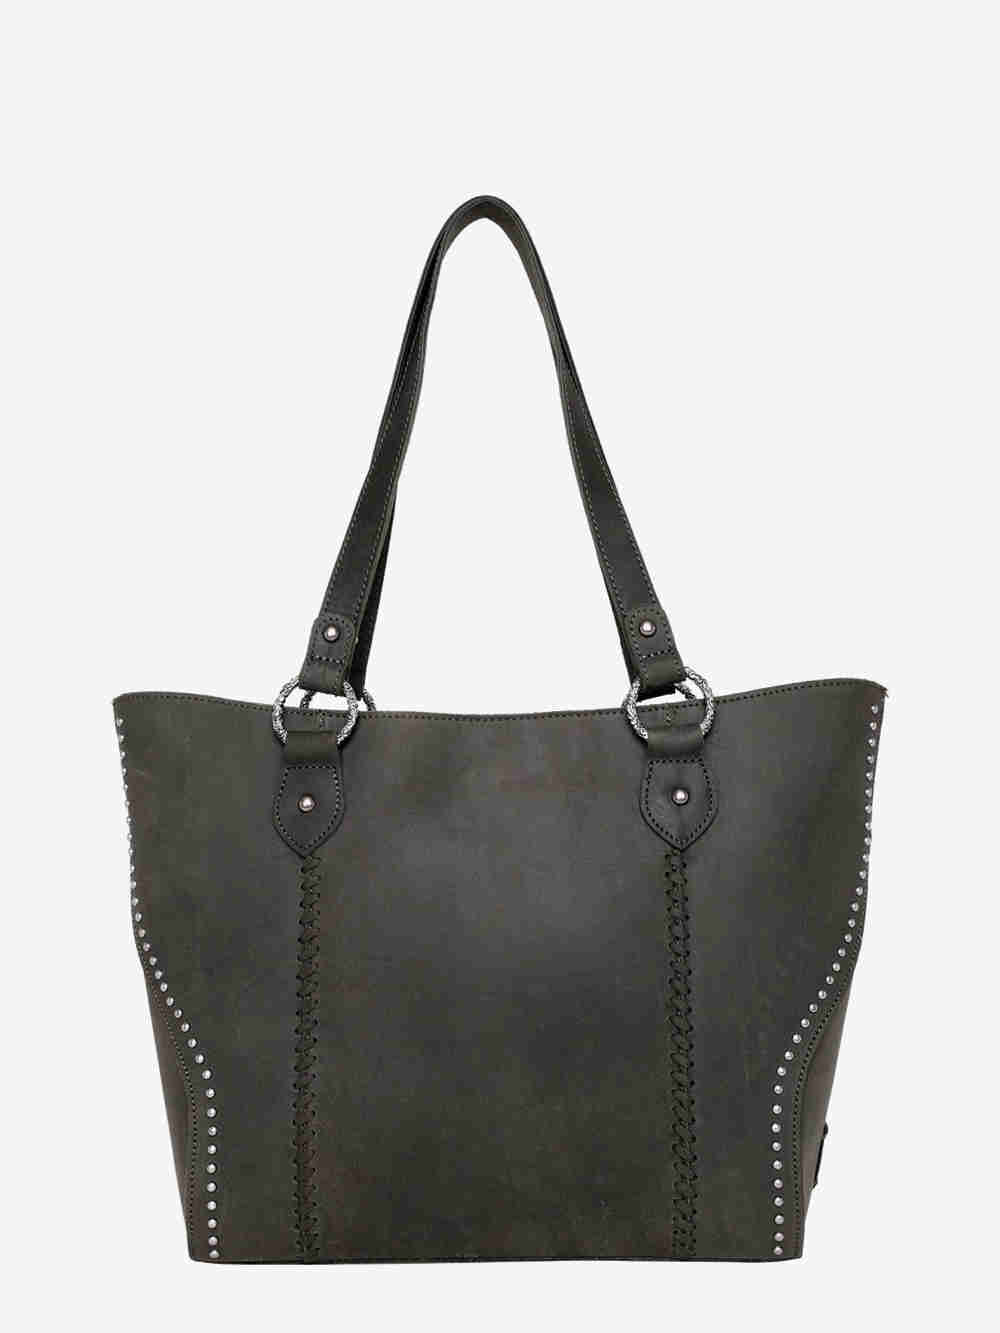 Black Genuine Leather Shopper Black Leather Bag Leather 